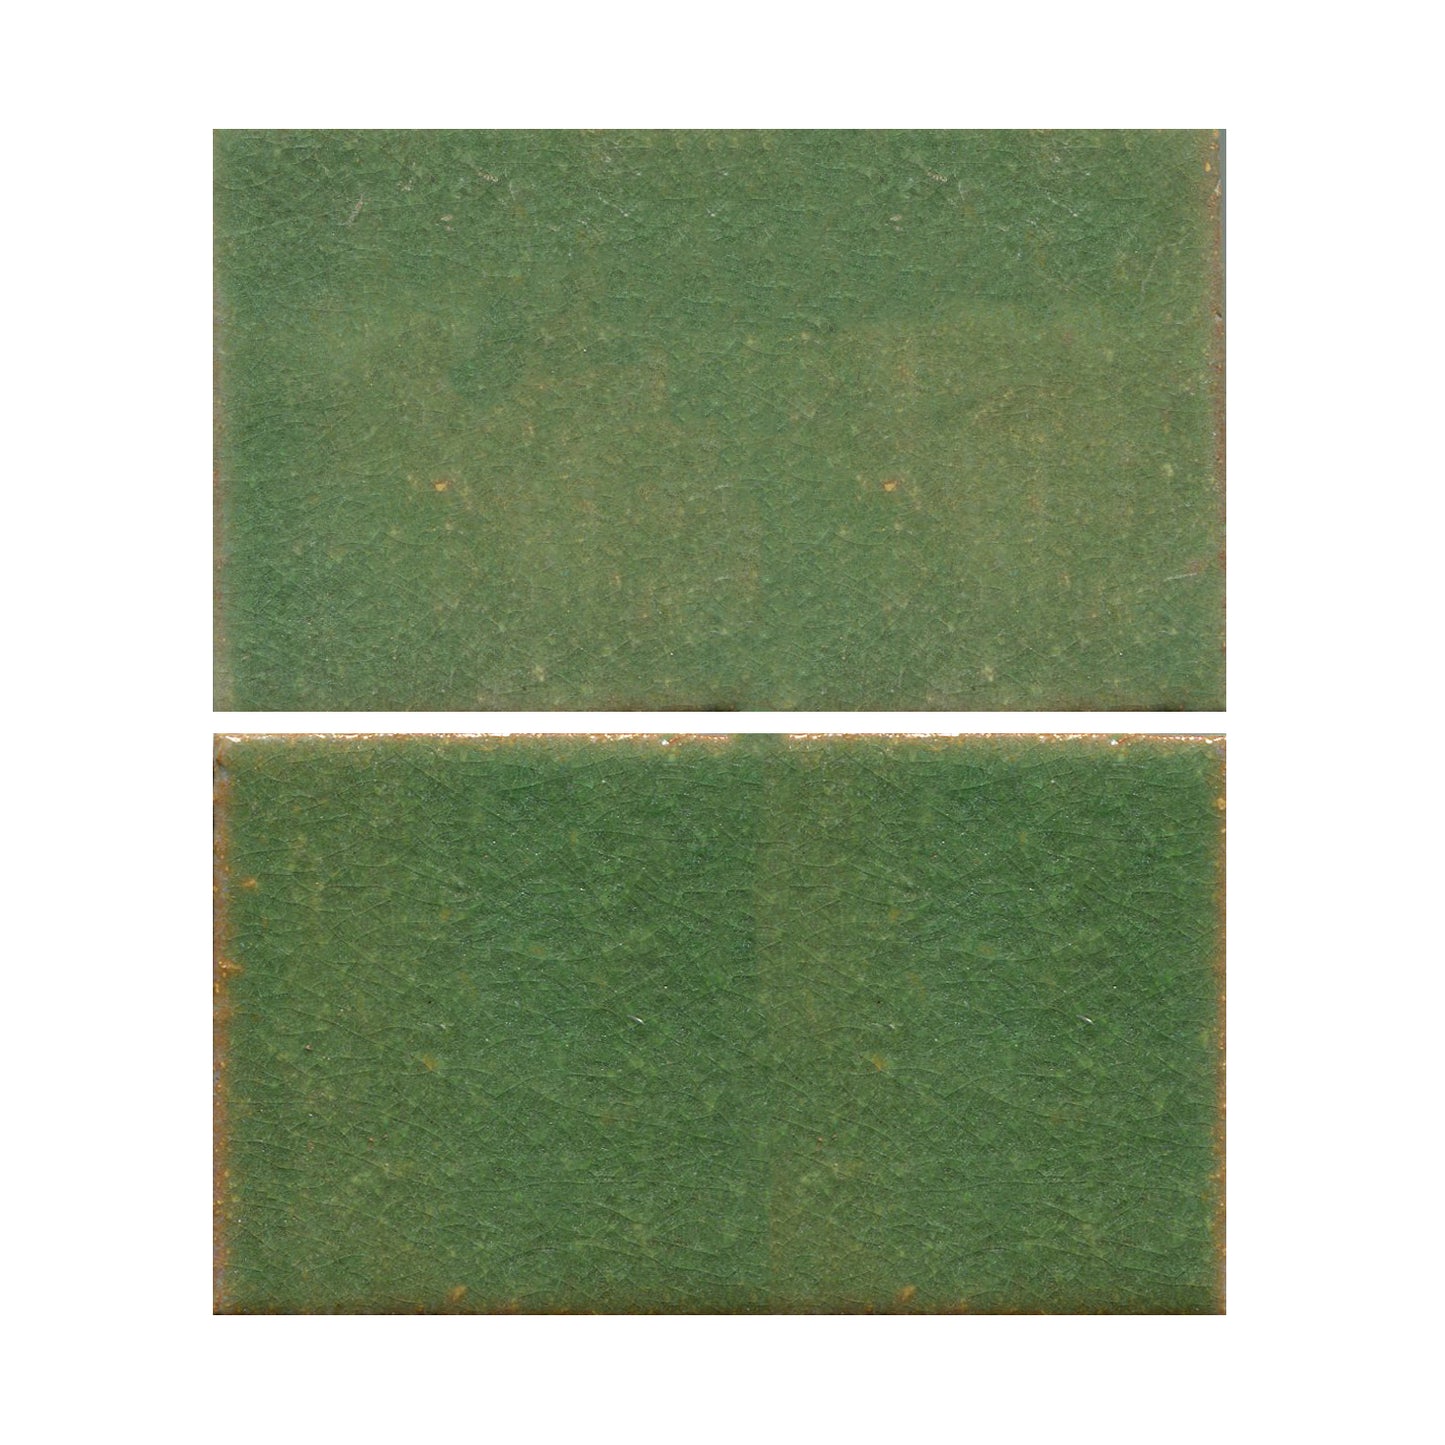 Avocado green 4x6 field tile